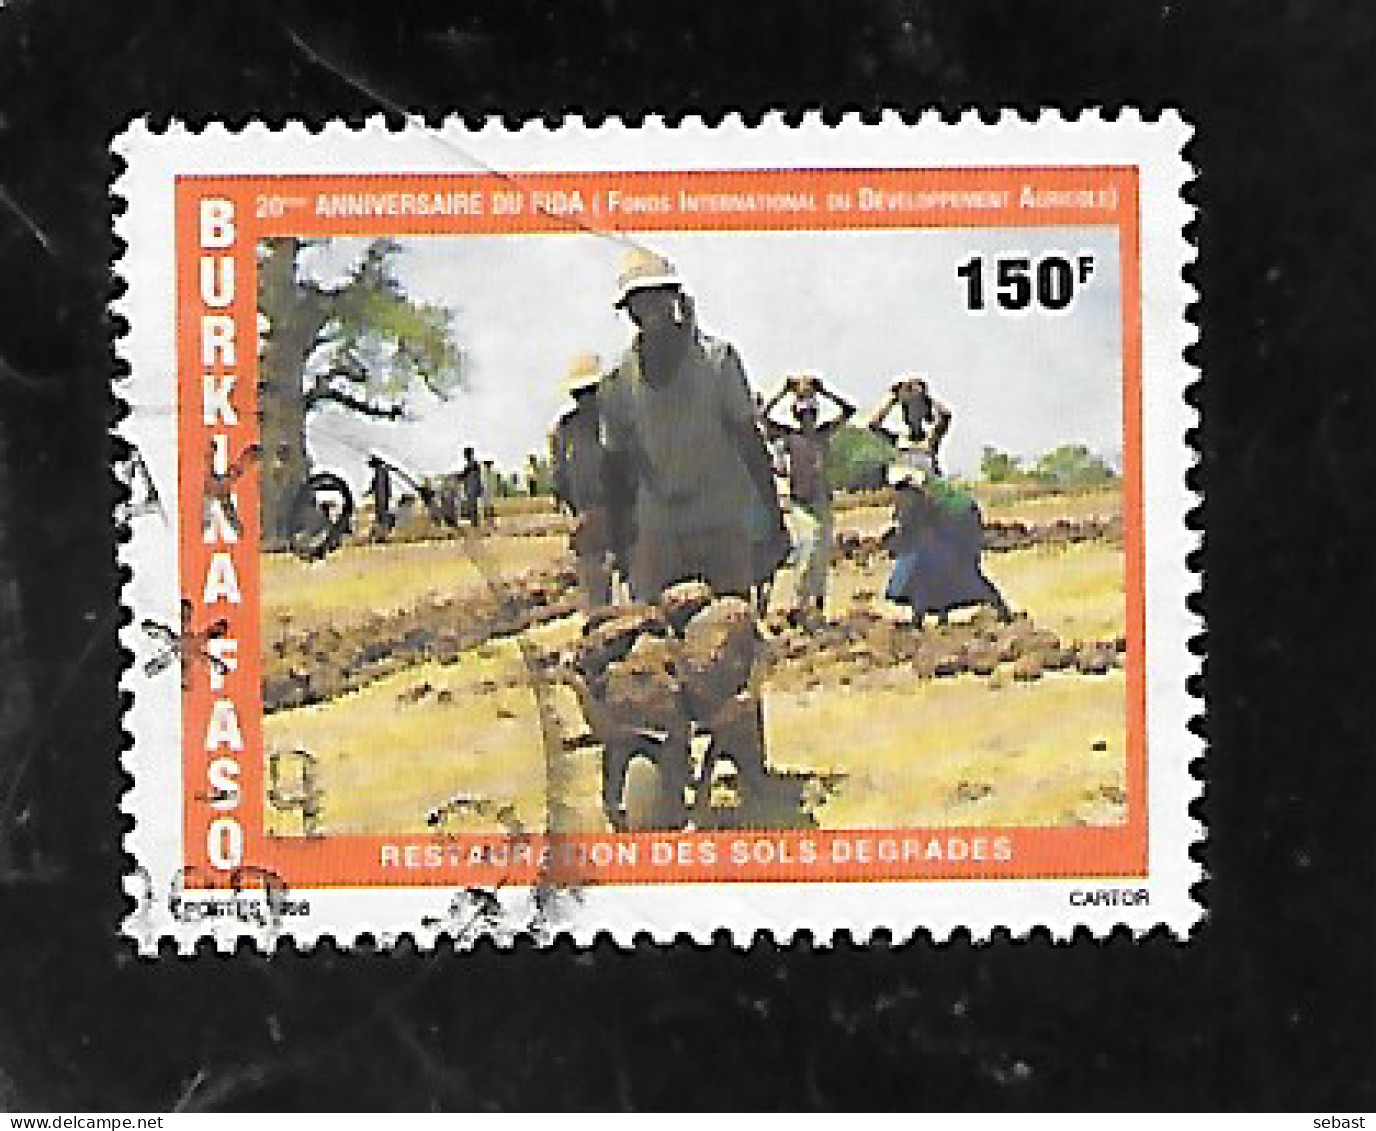 TIMBRE OBLITERE DU BURKINA DE 1998 N° MICHEL 1499 TRES RARE - Burkina Faso (1984-...)